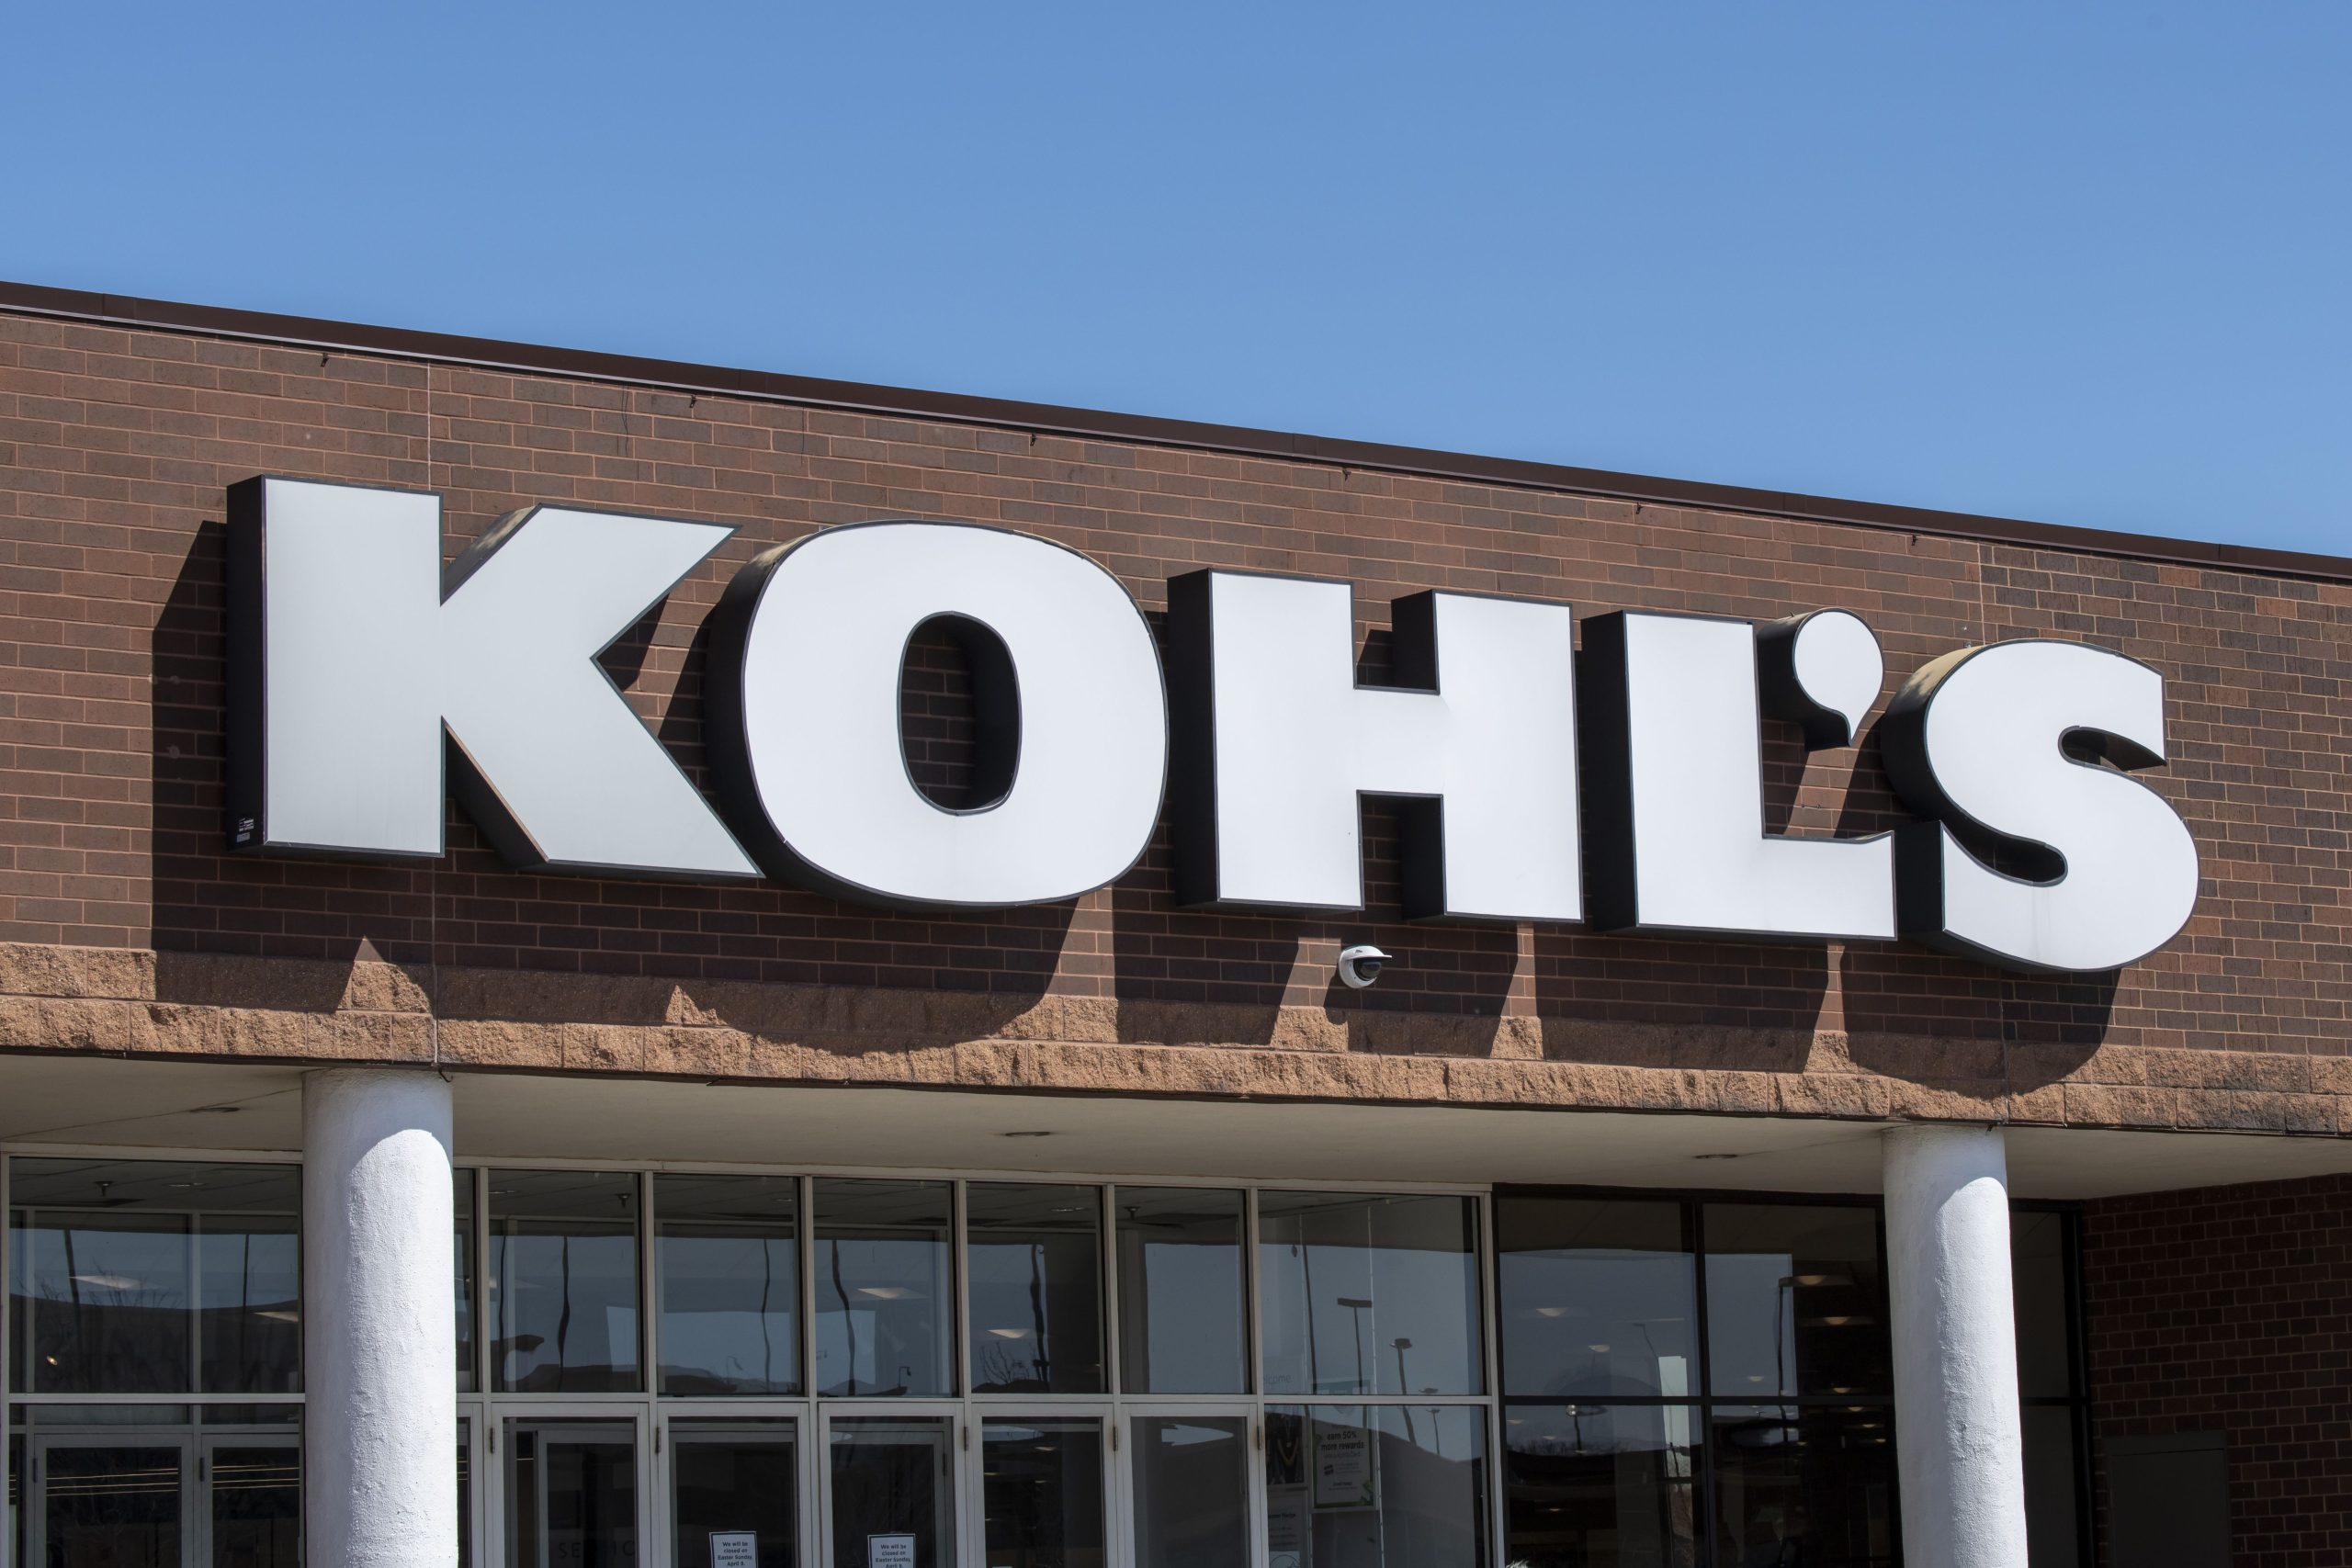 Kohl's Rewards program: Shop and save with Kohl's Cash